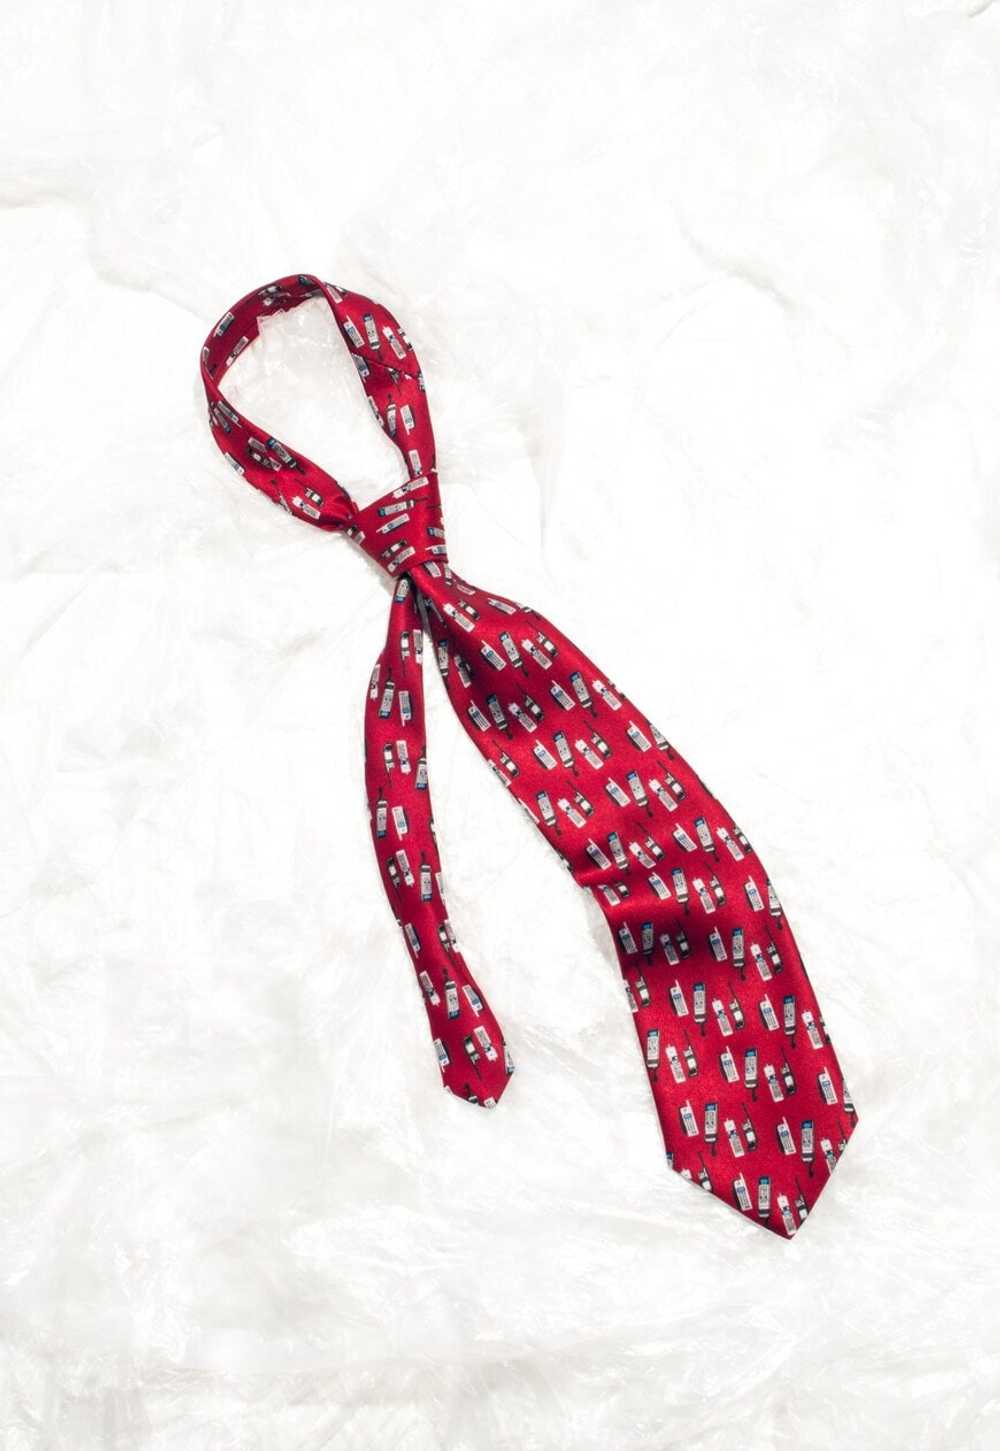 Vintage 90s Red Tie with Brick Phone Pattern - image 3